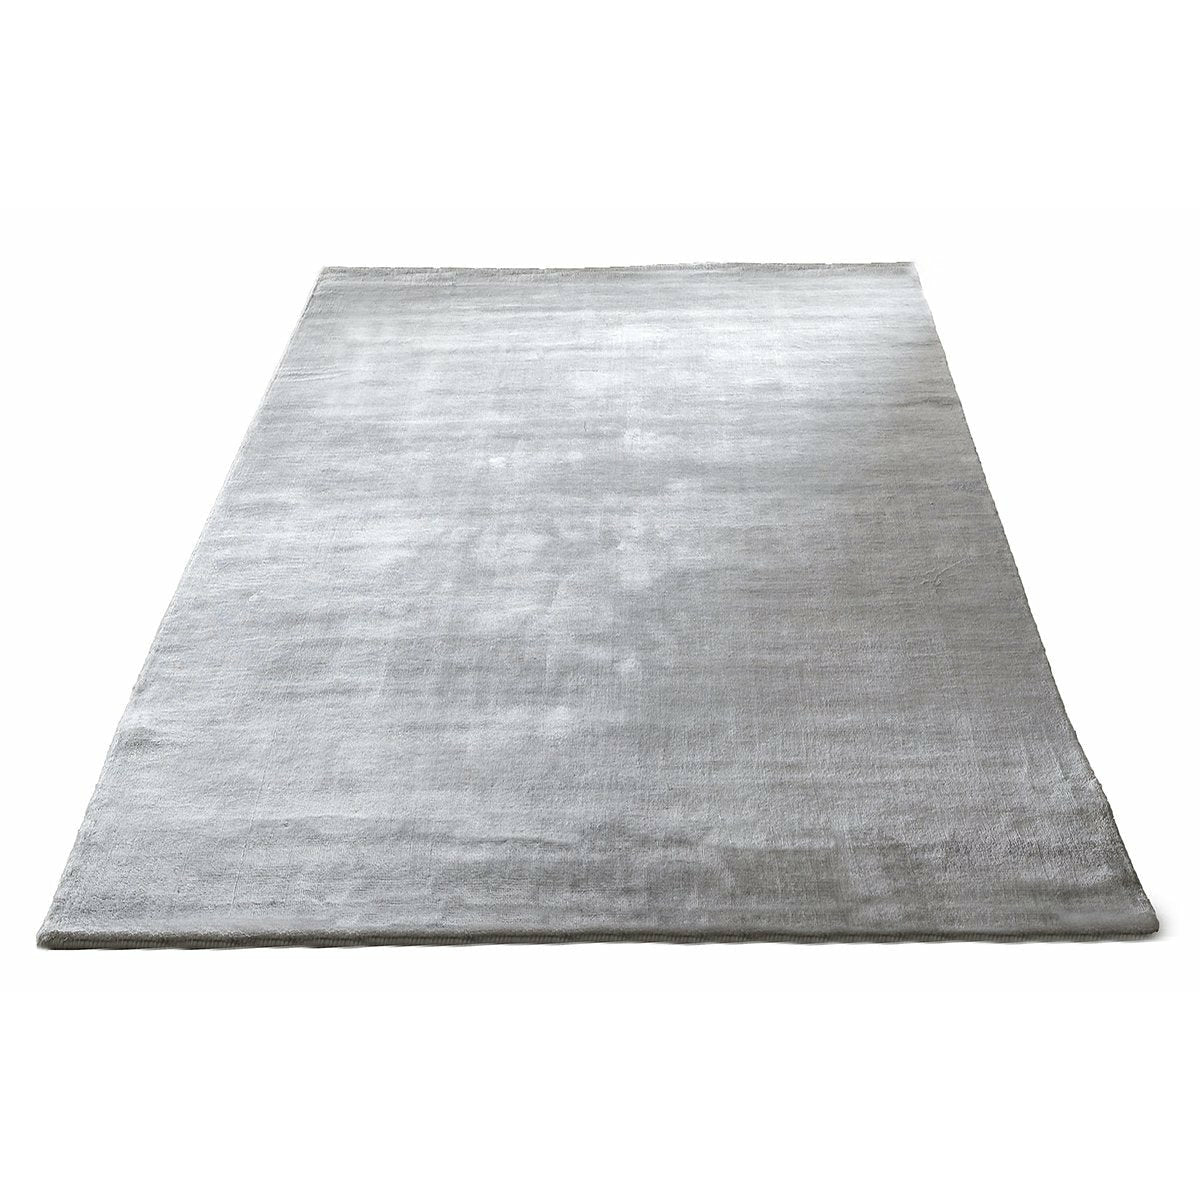 Massimo Bambu -matta ljusgrå, 200x300 cm